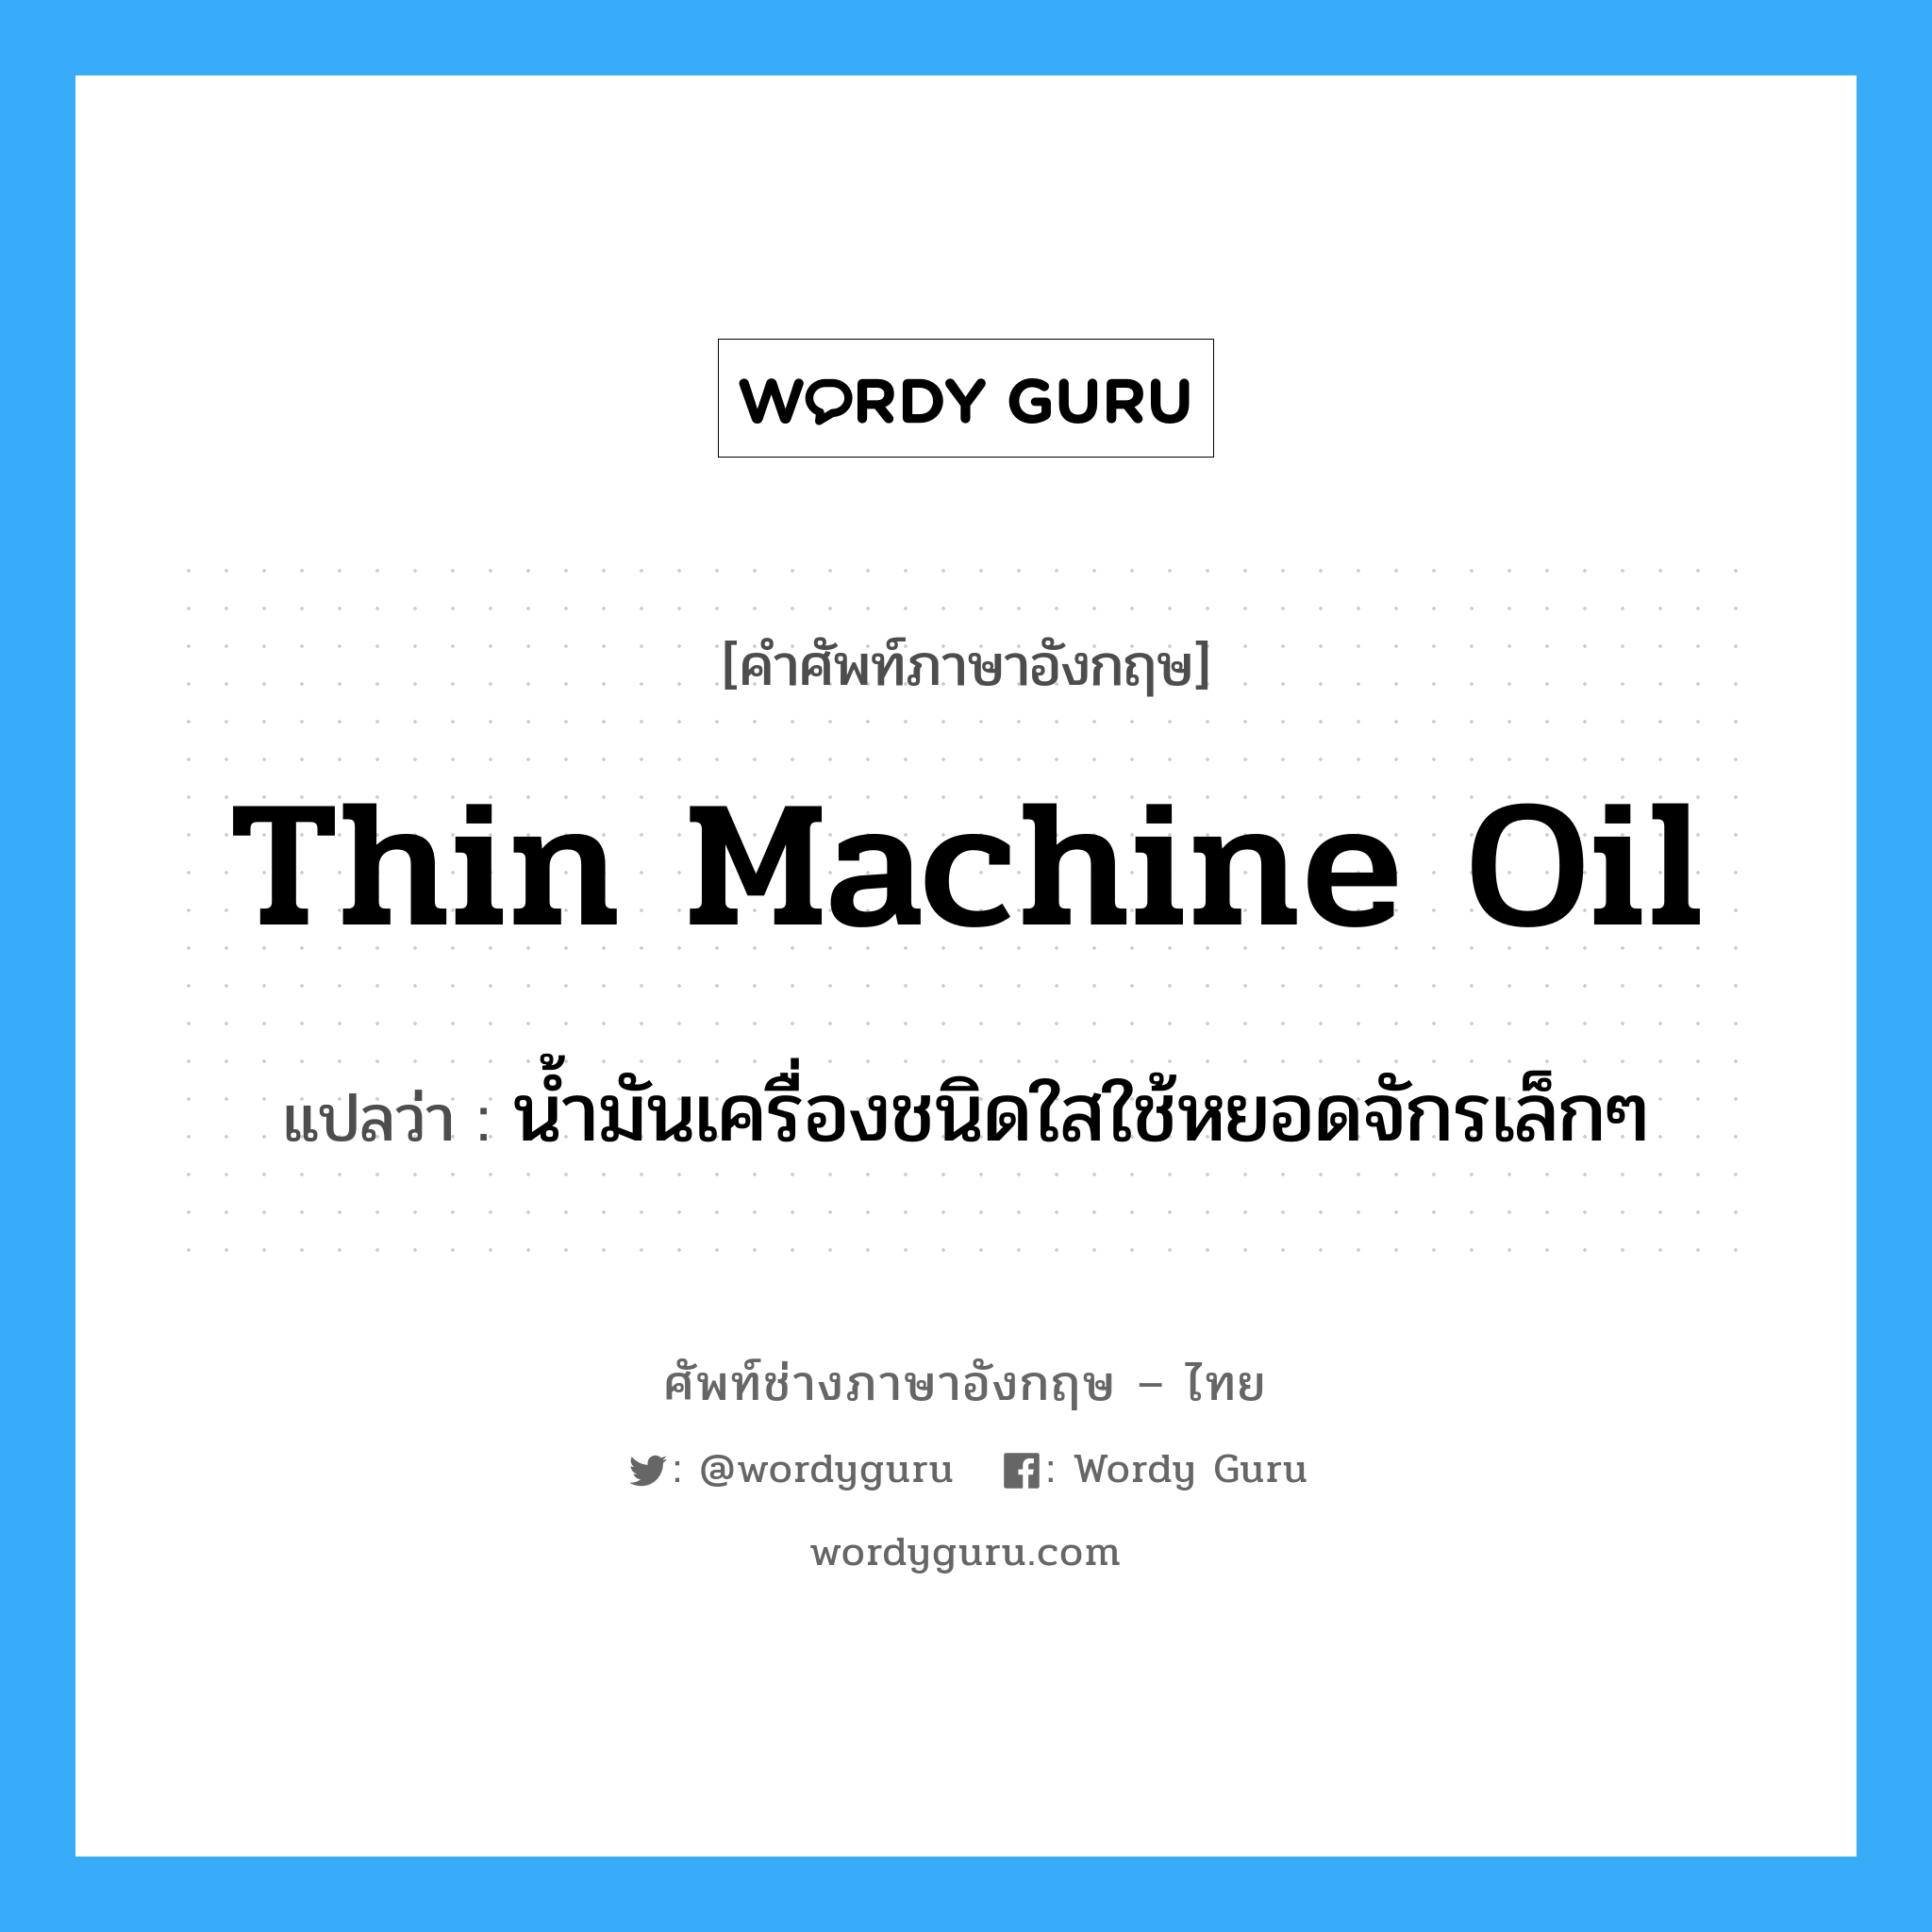 thin machine oil แปลว่า?, คำศัพท์ช่างภาษาอังกฤษ - ไทย thin machine oil คำศัพท์ภาษาอังกฤษ thin machine oil แปลว่า น้ำมันเครื่องชนิดใสใช้หยอดจักรเล็กๆ